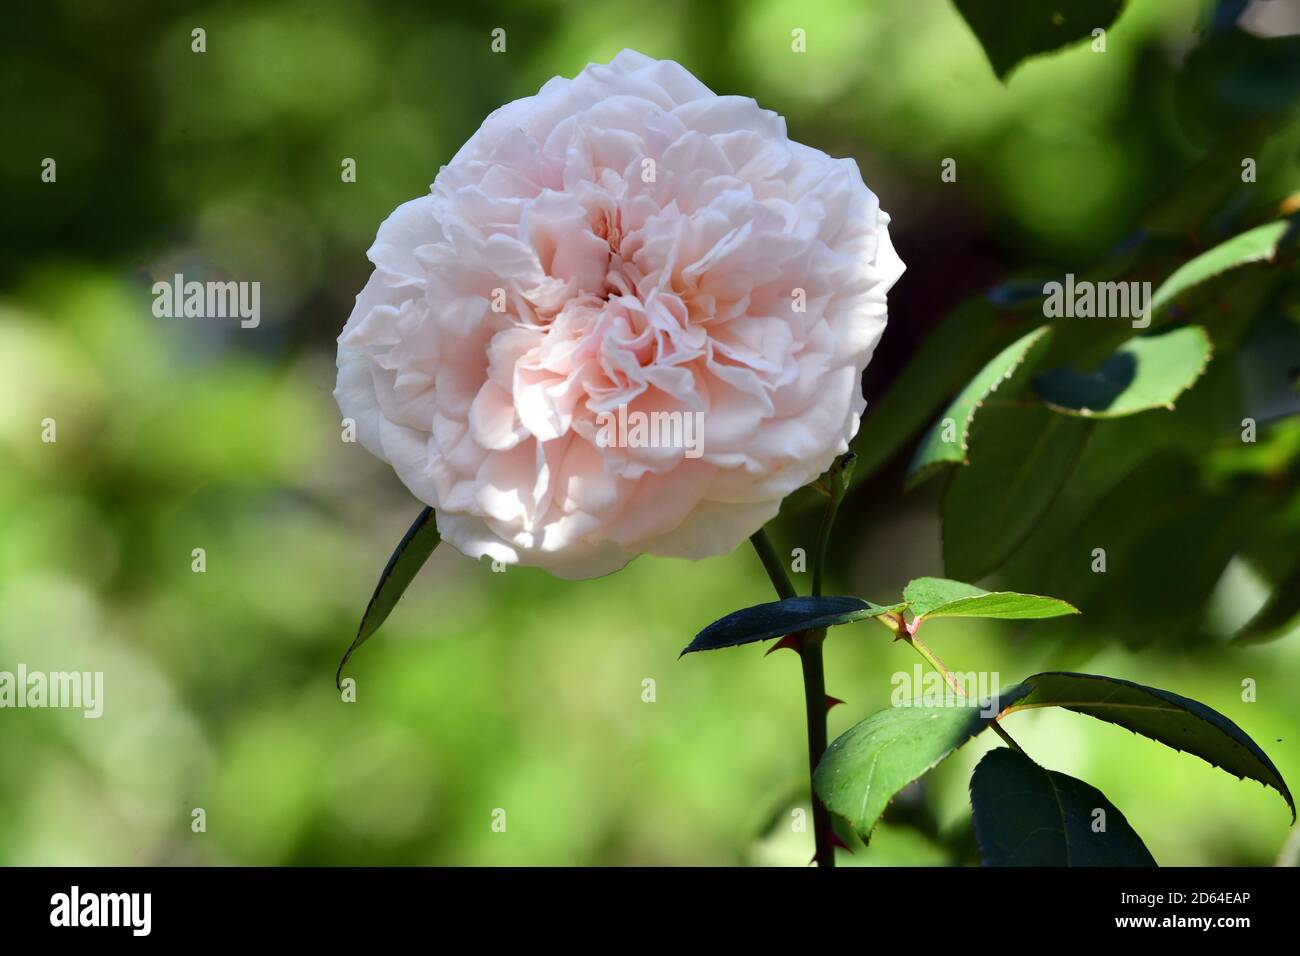 A single white rose in the garden Stock Photo